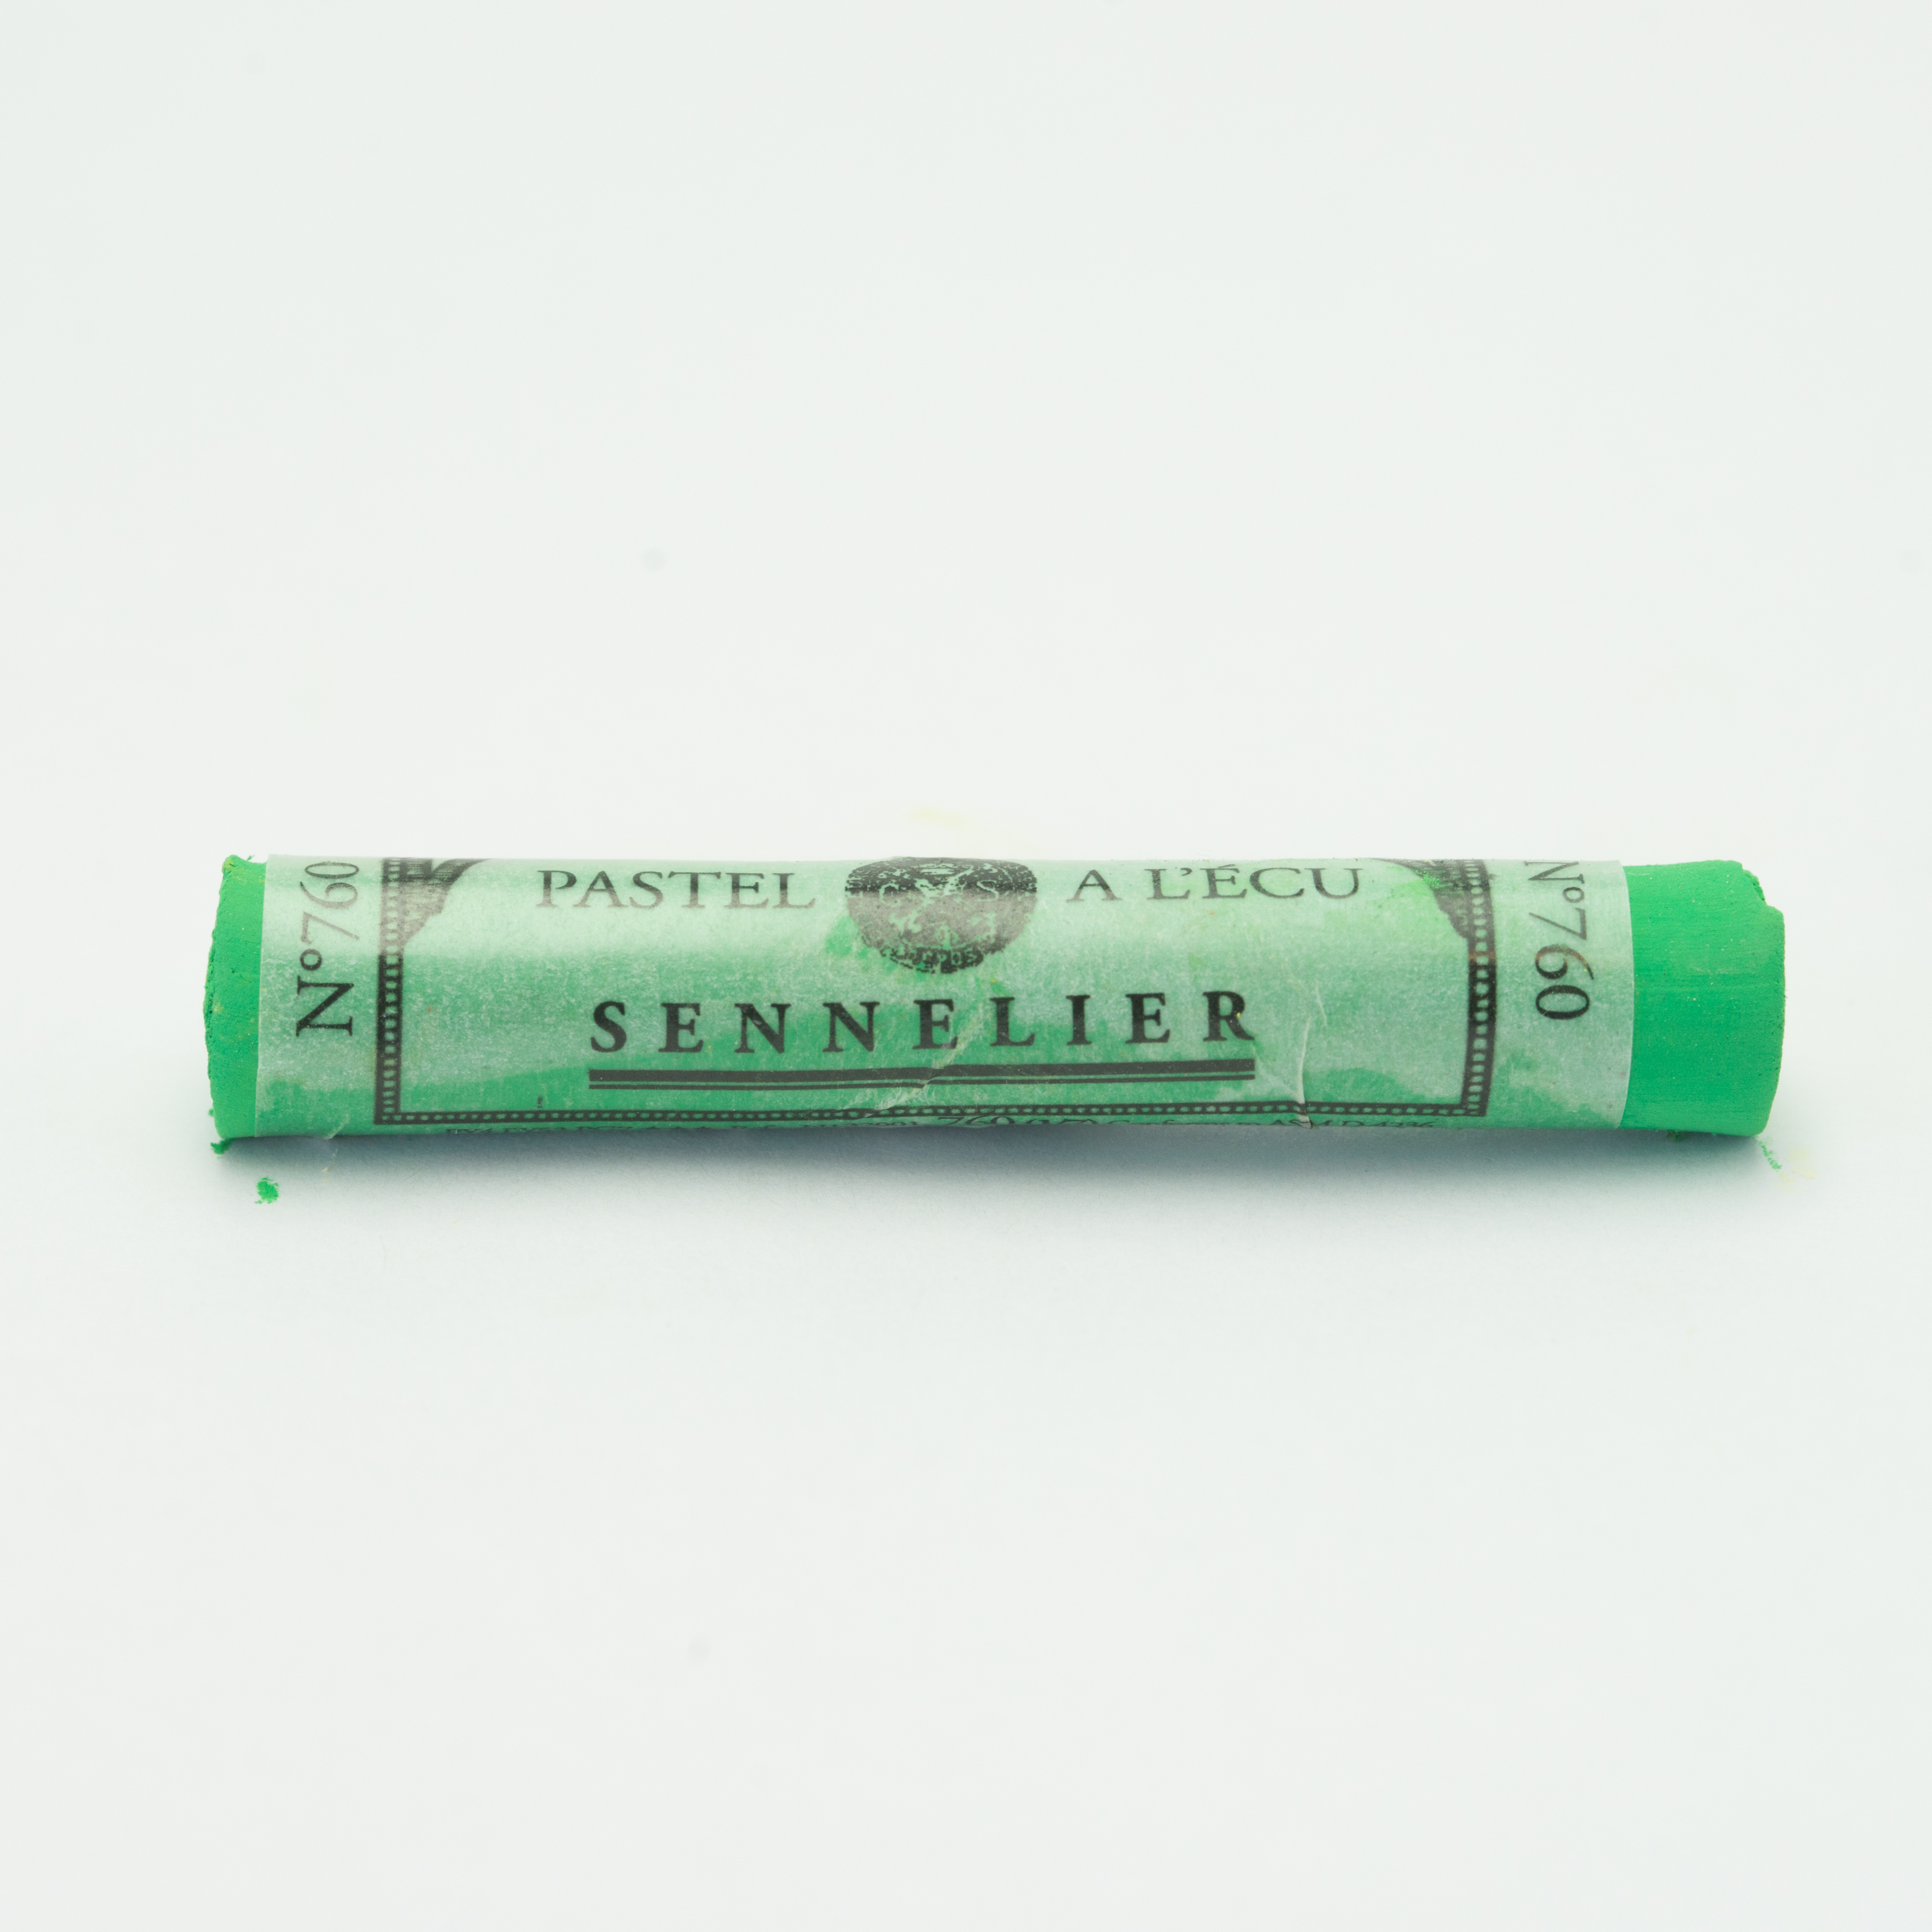 Sennelier Extra Soft Pastels - Baryte Green 760